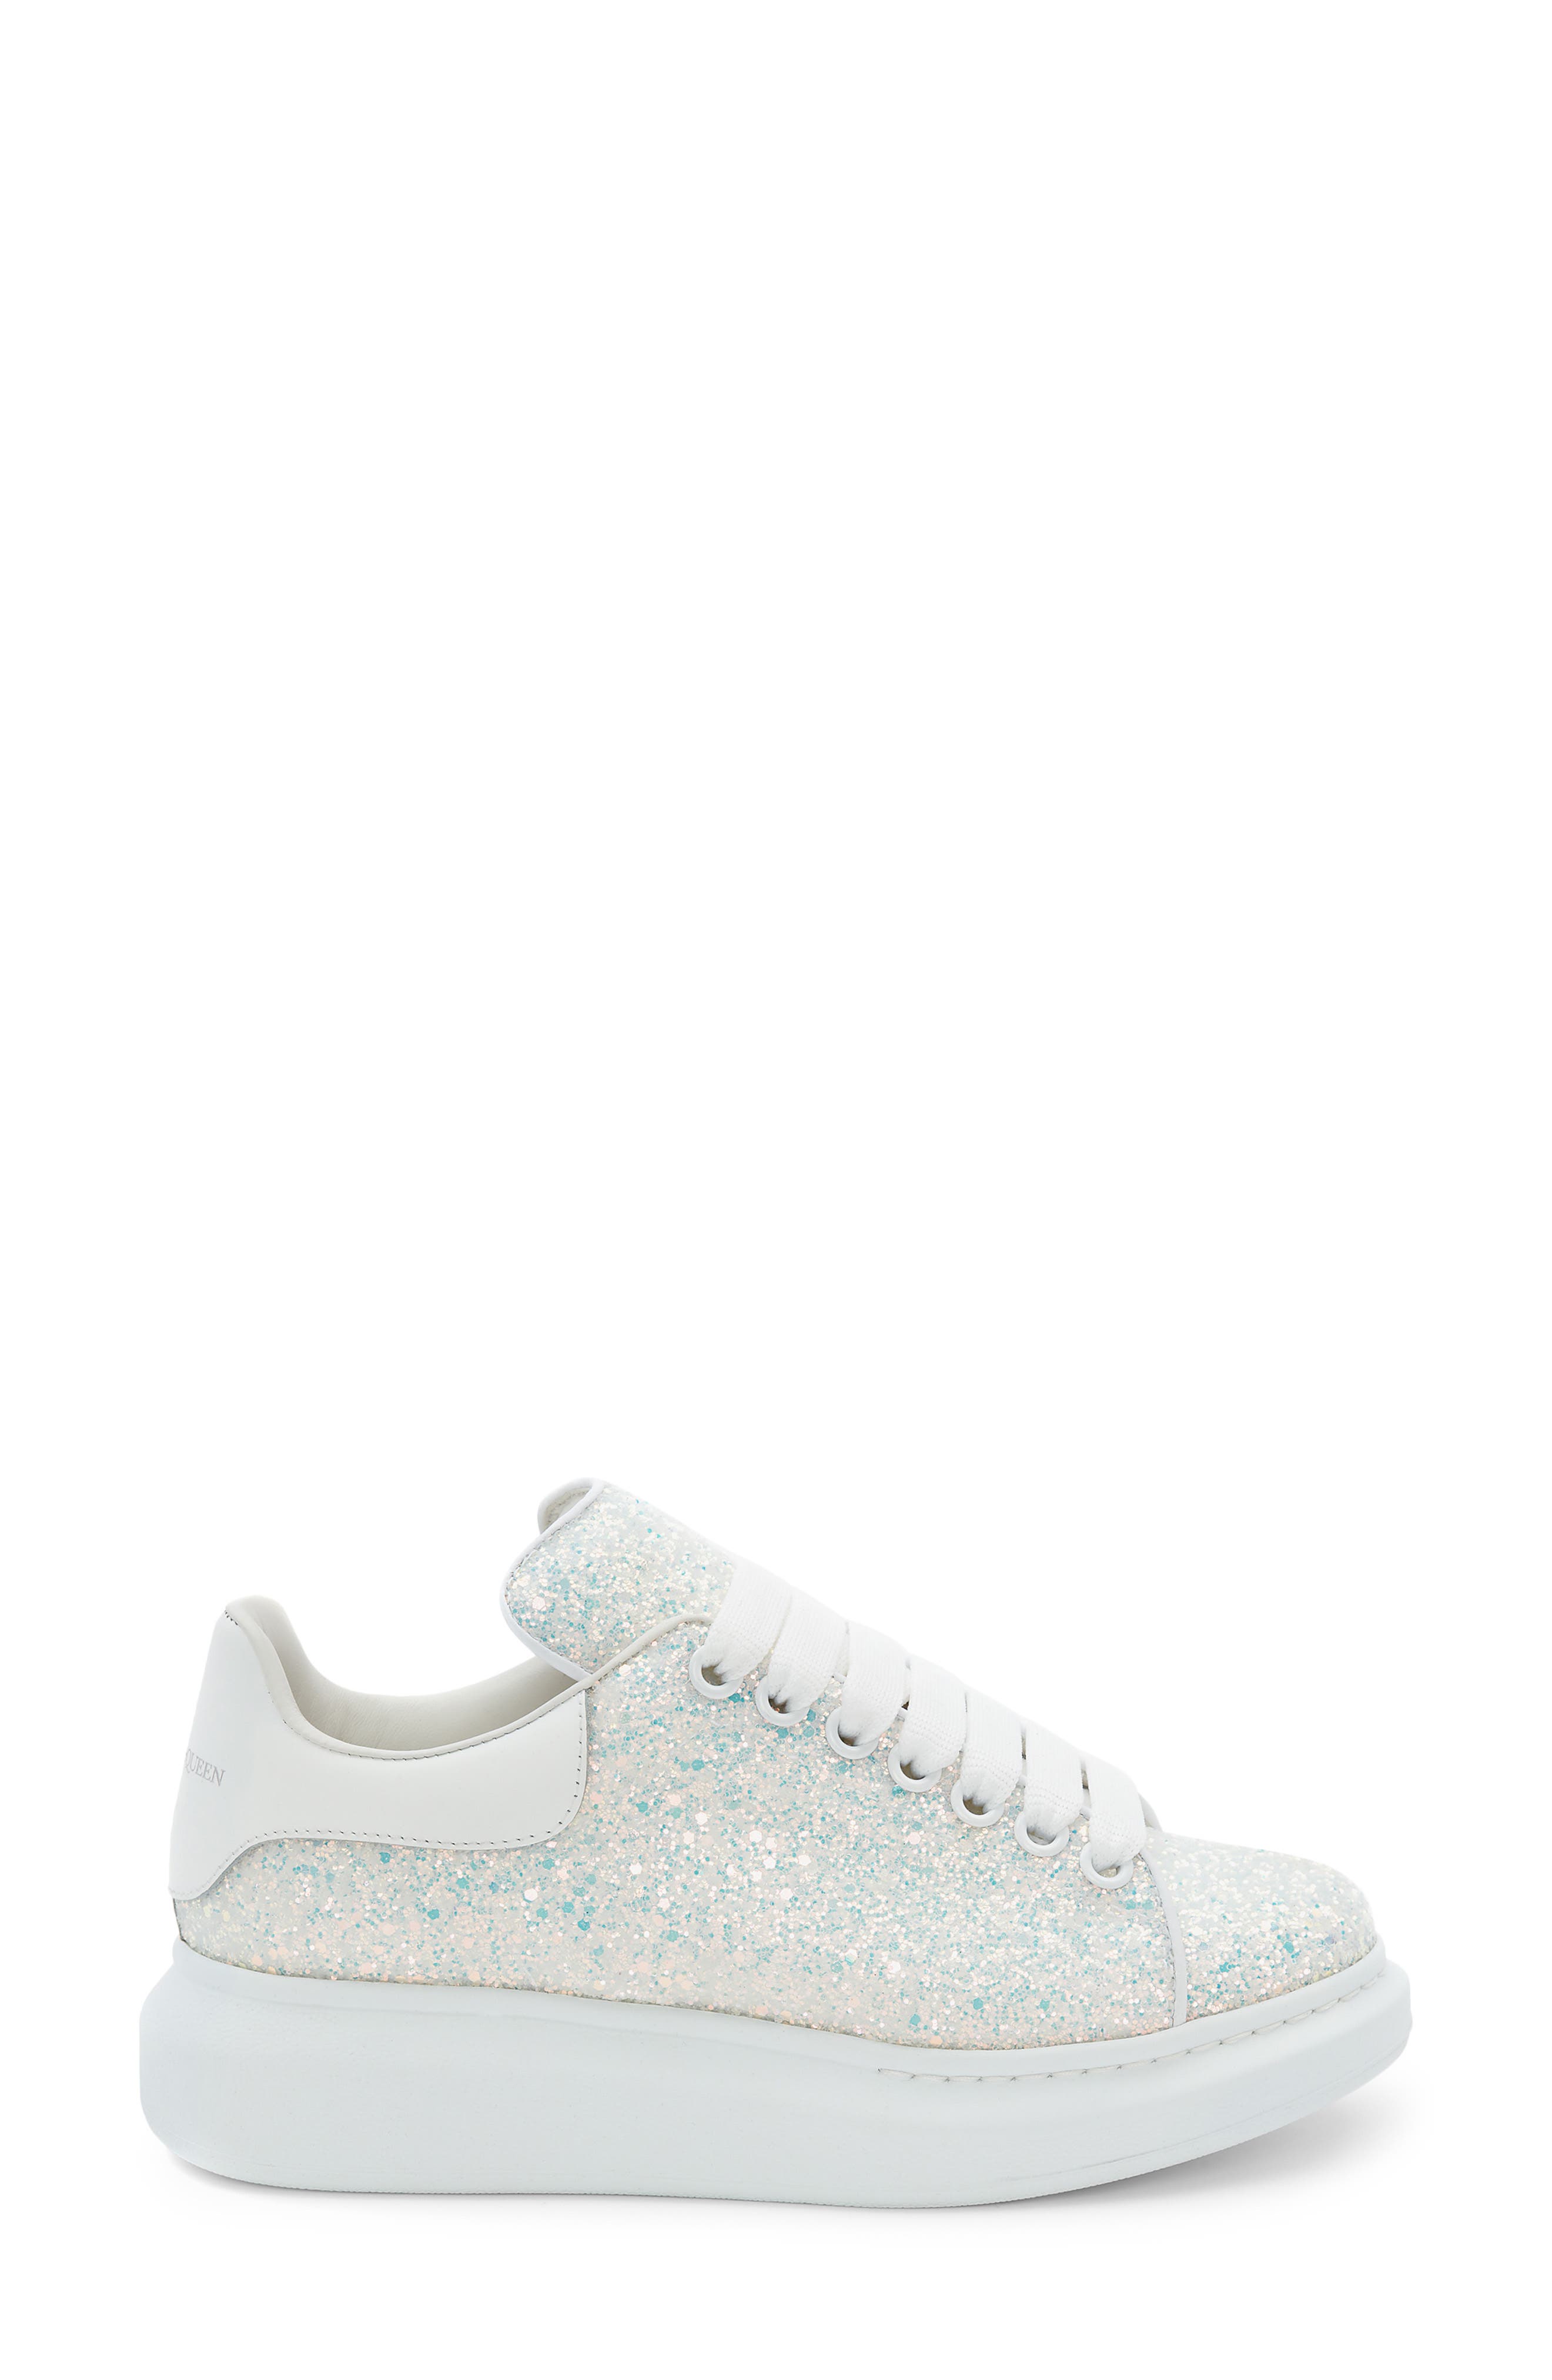 Alexander McQueen Oversize Glitter Sneaker in White at Nordstrom, Size 4Us